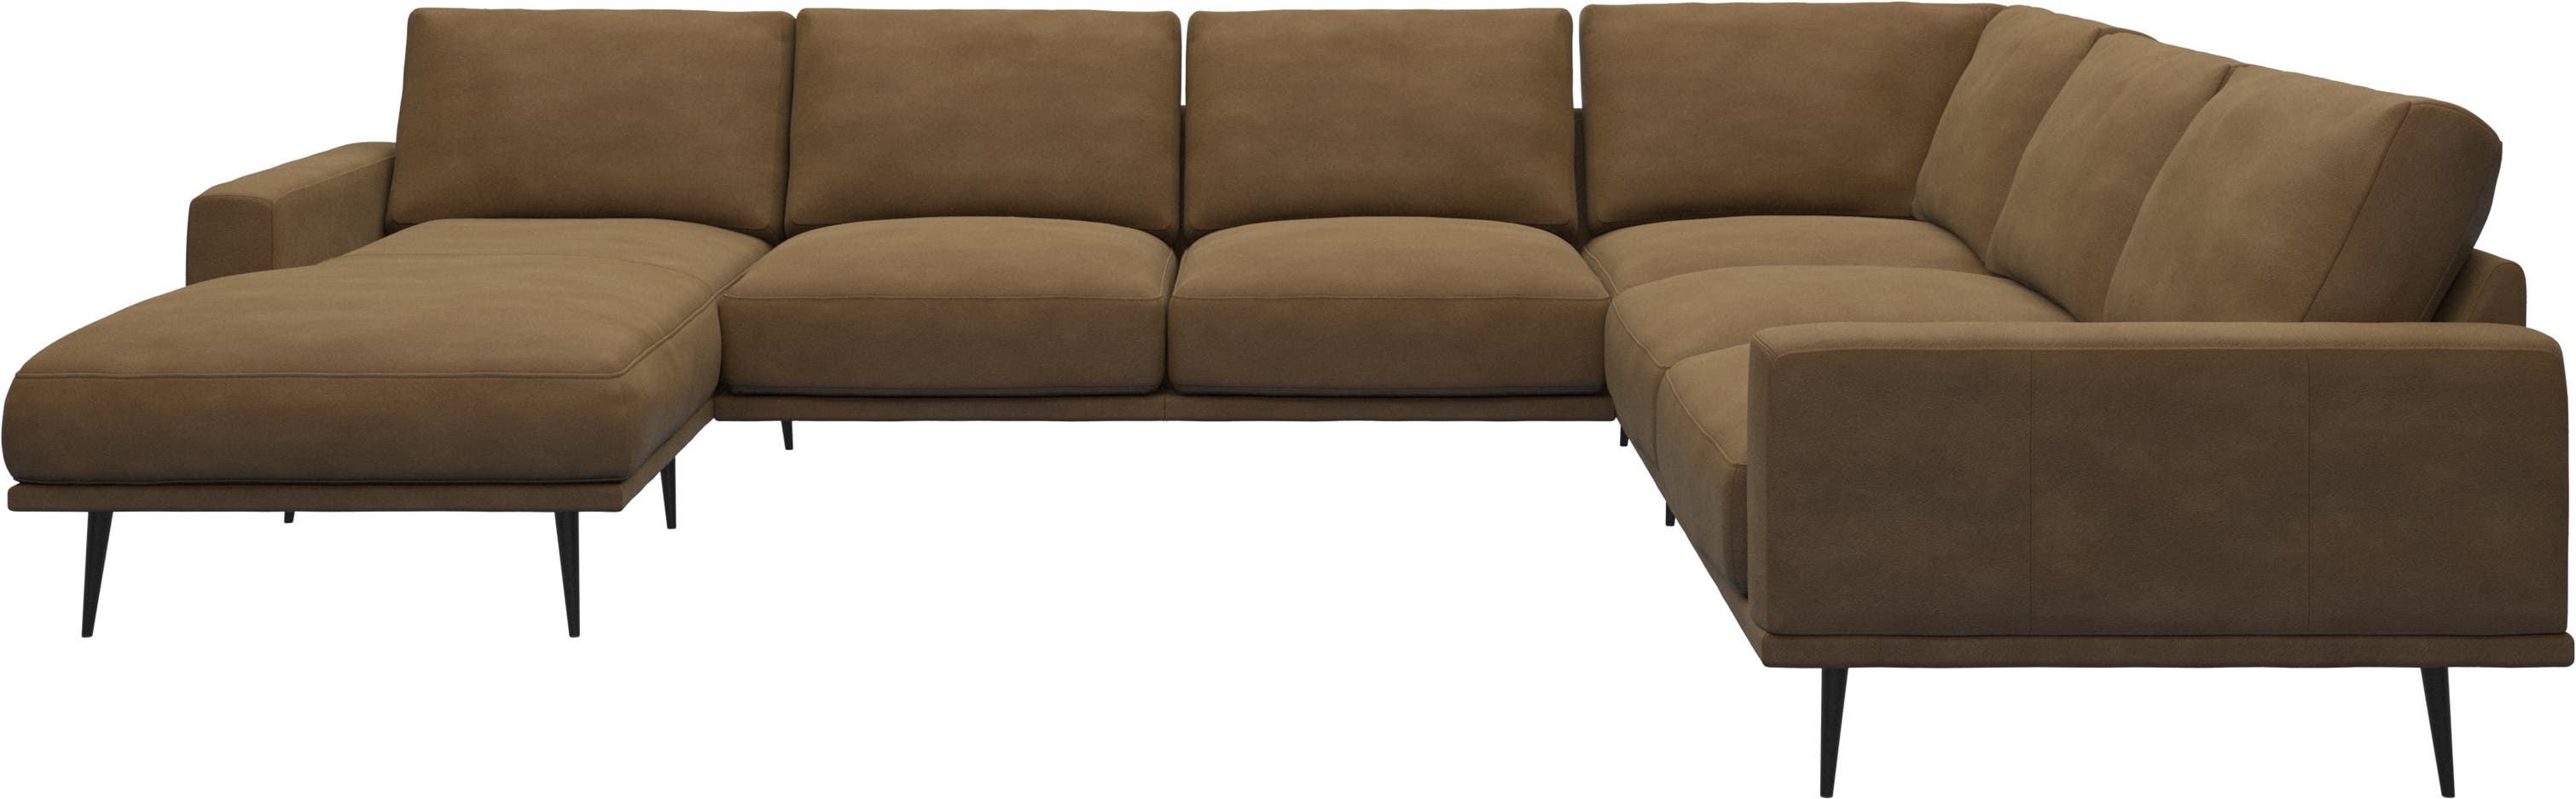 Carlton corner sofa with resting unit